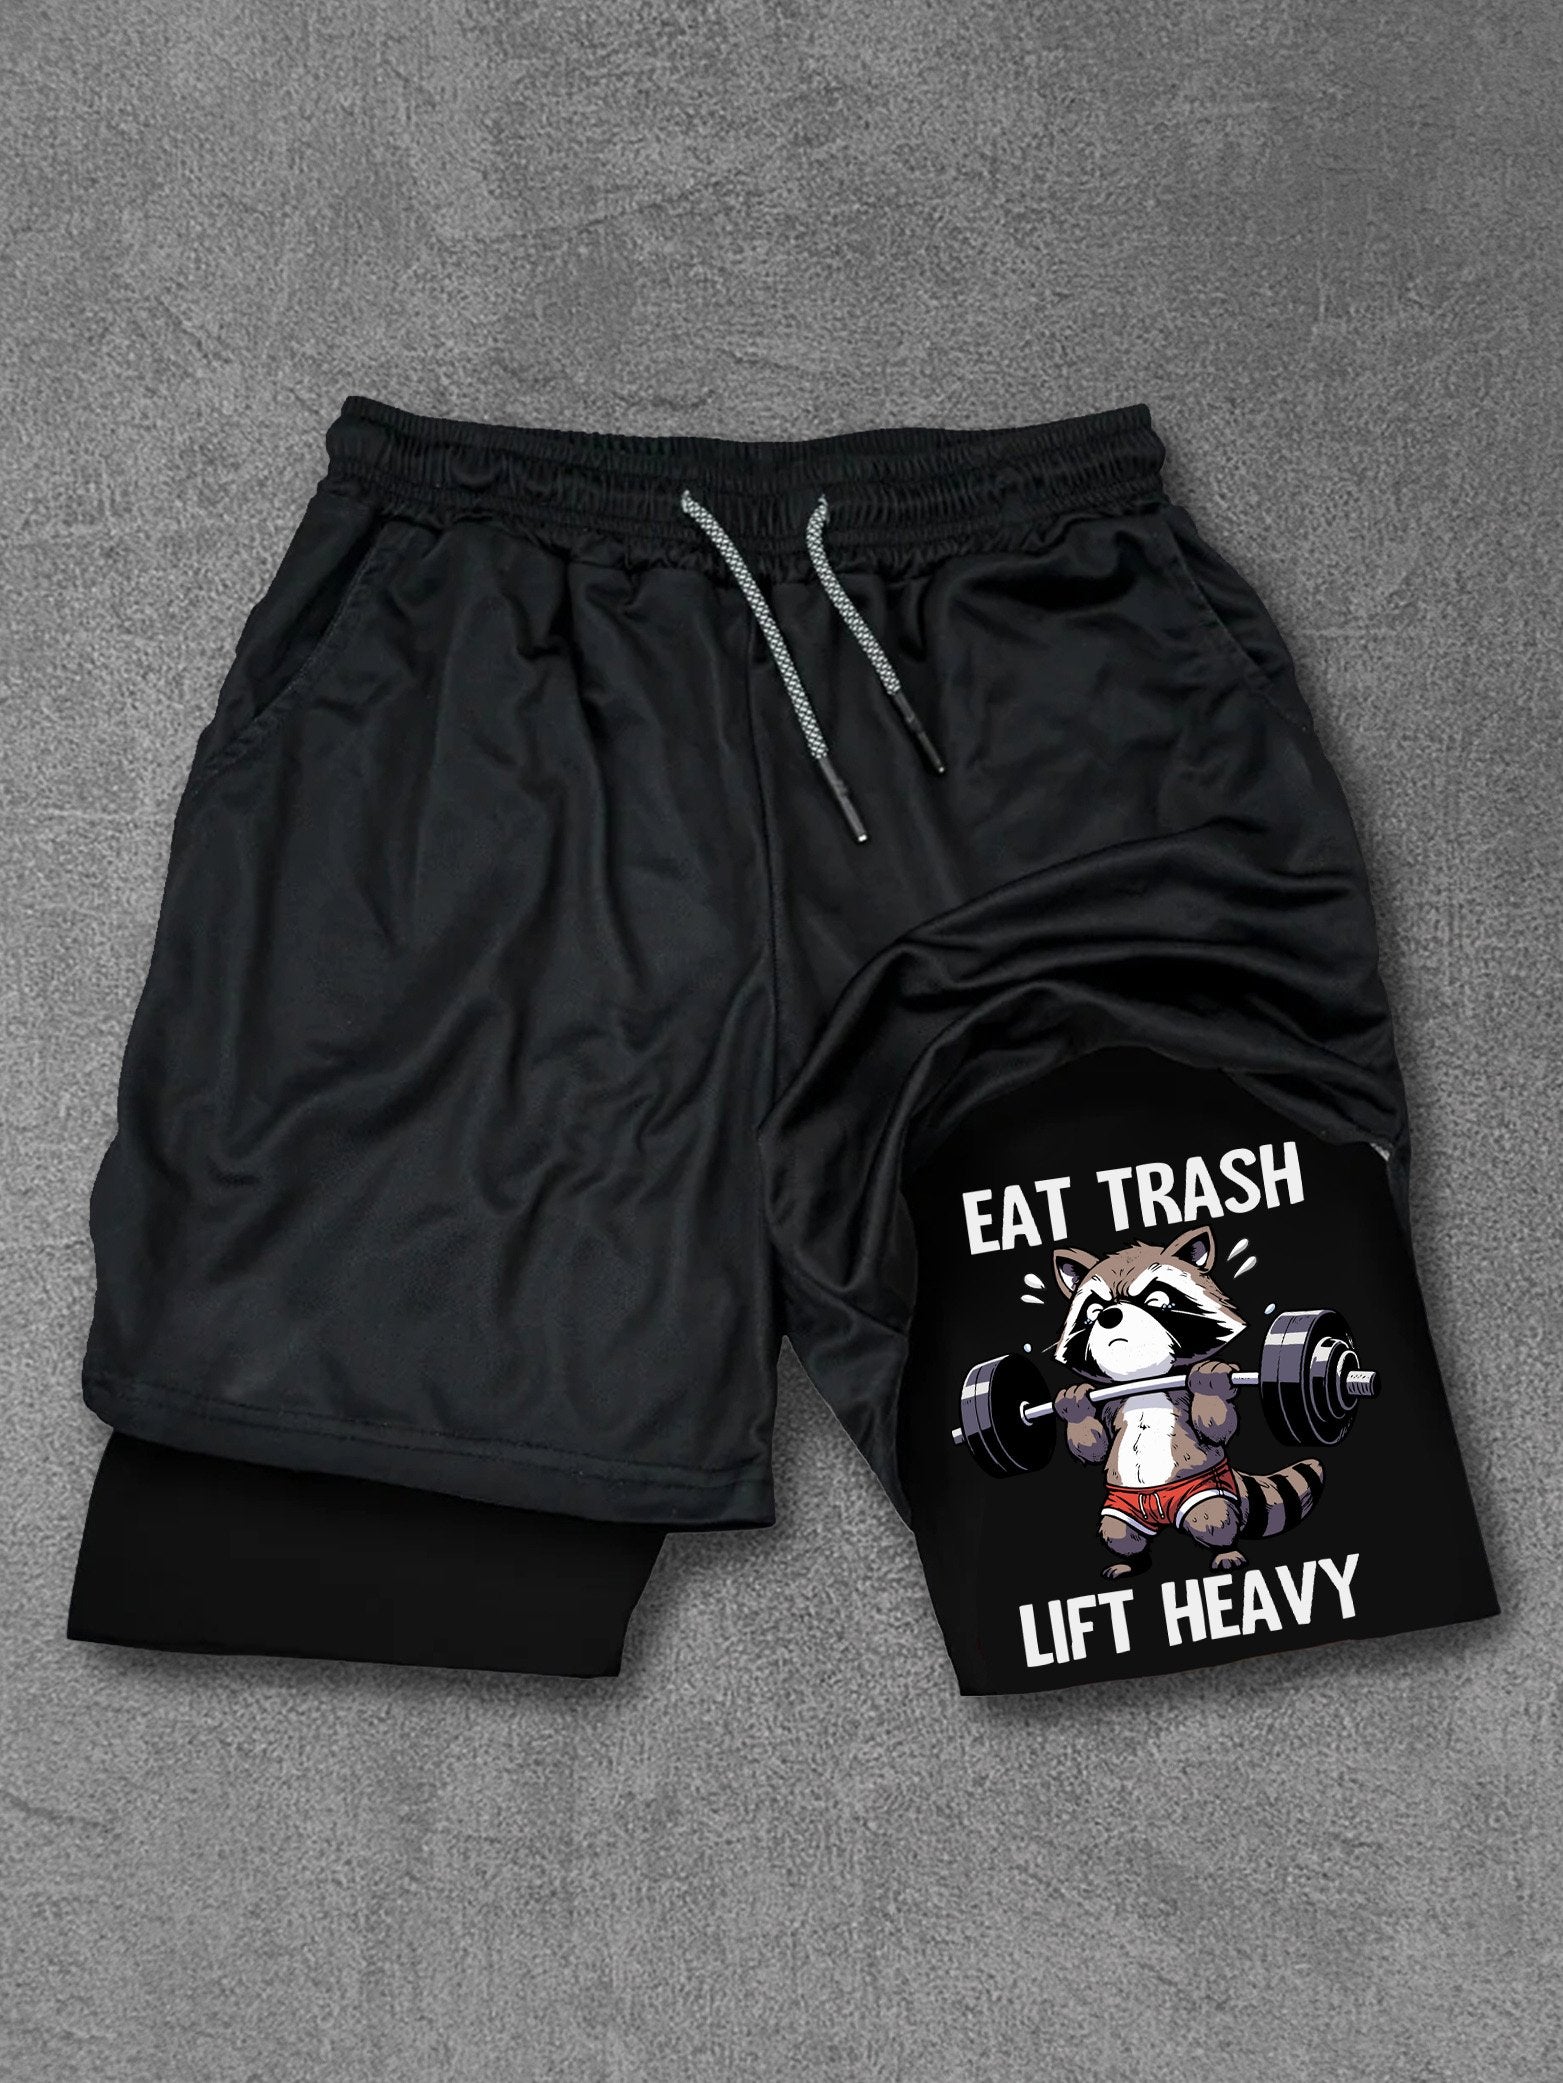 eat trash lift heavy Performance Training Shorts